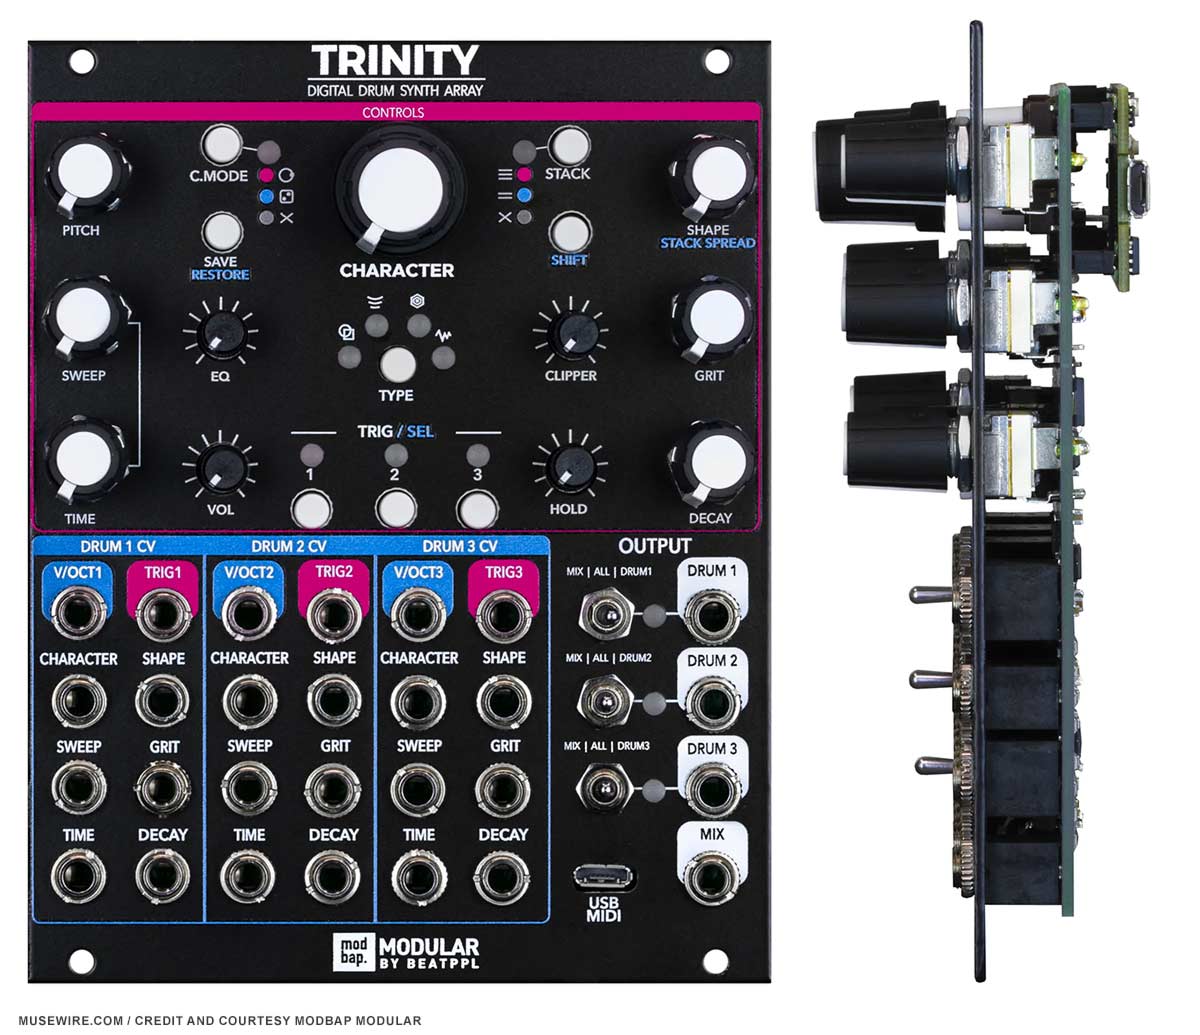 Trinity eurorack drum module from MODBAP MODULAR